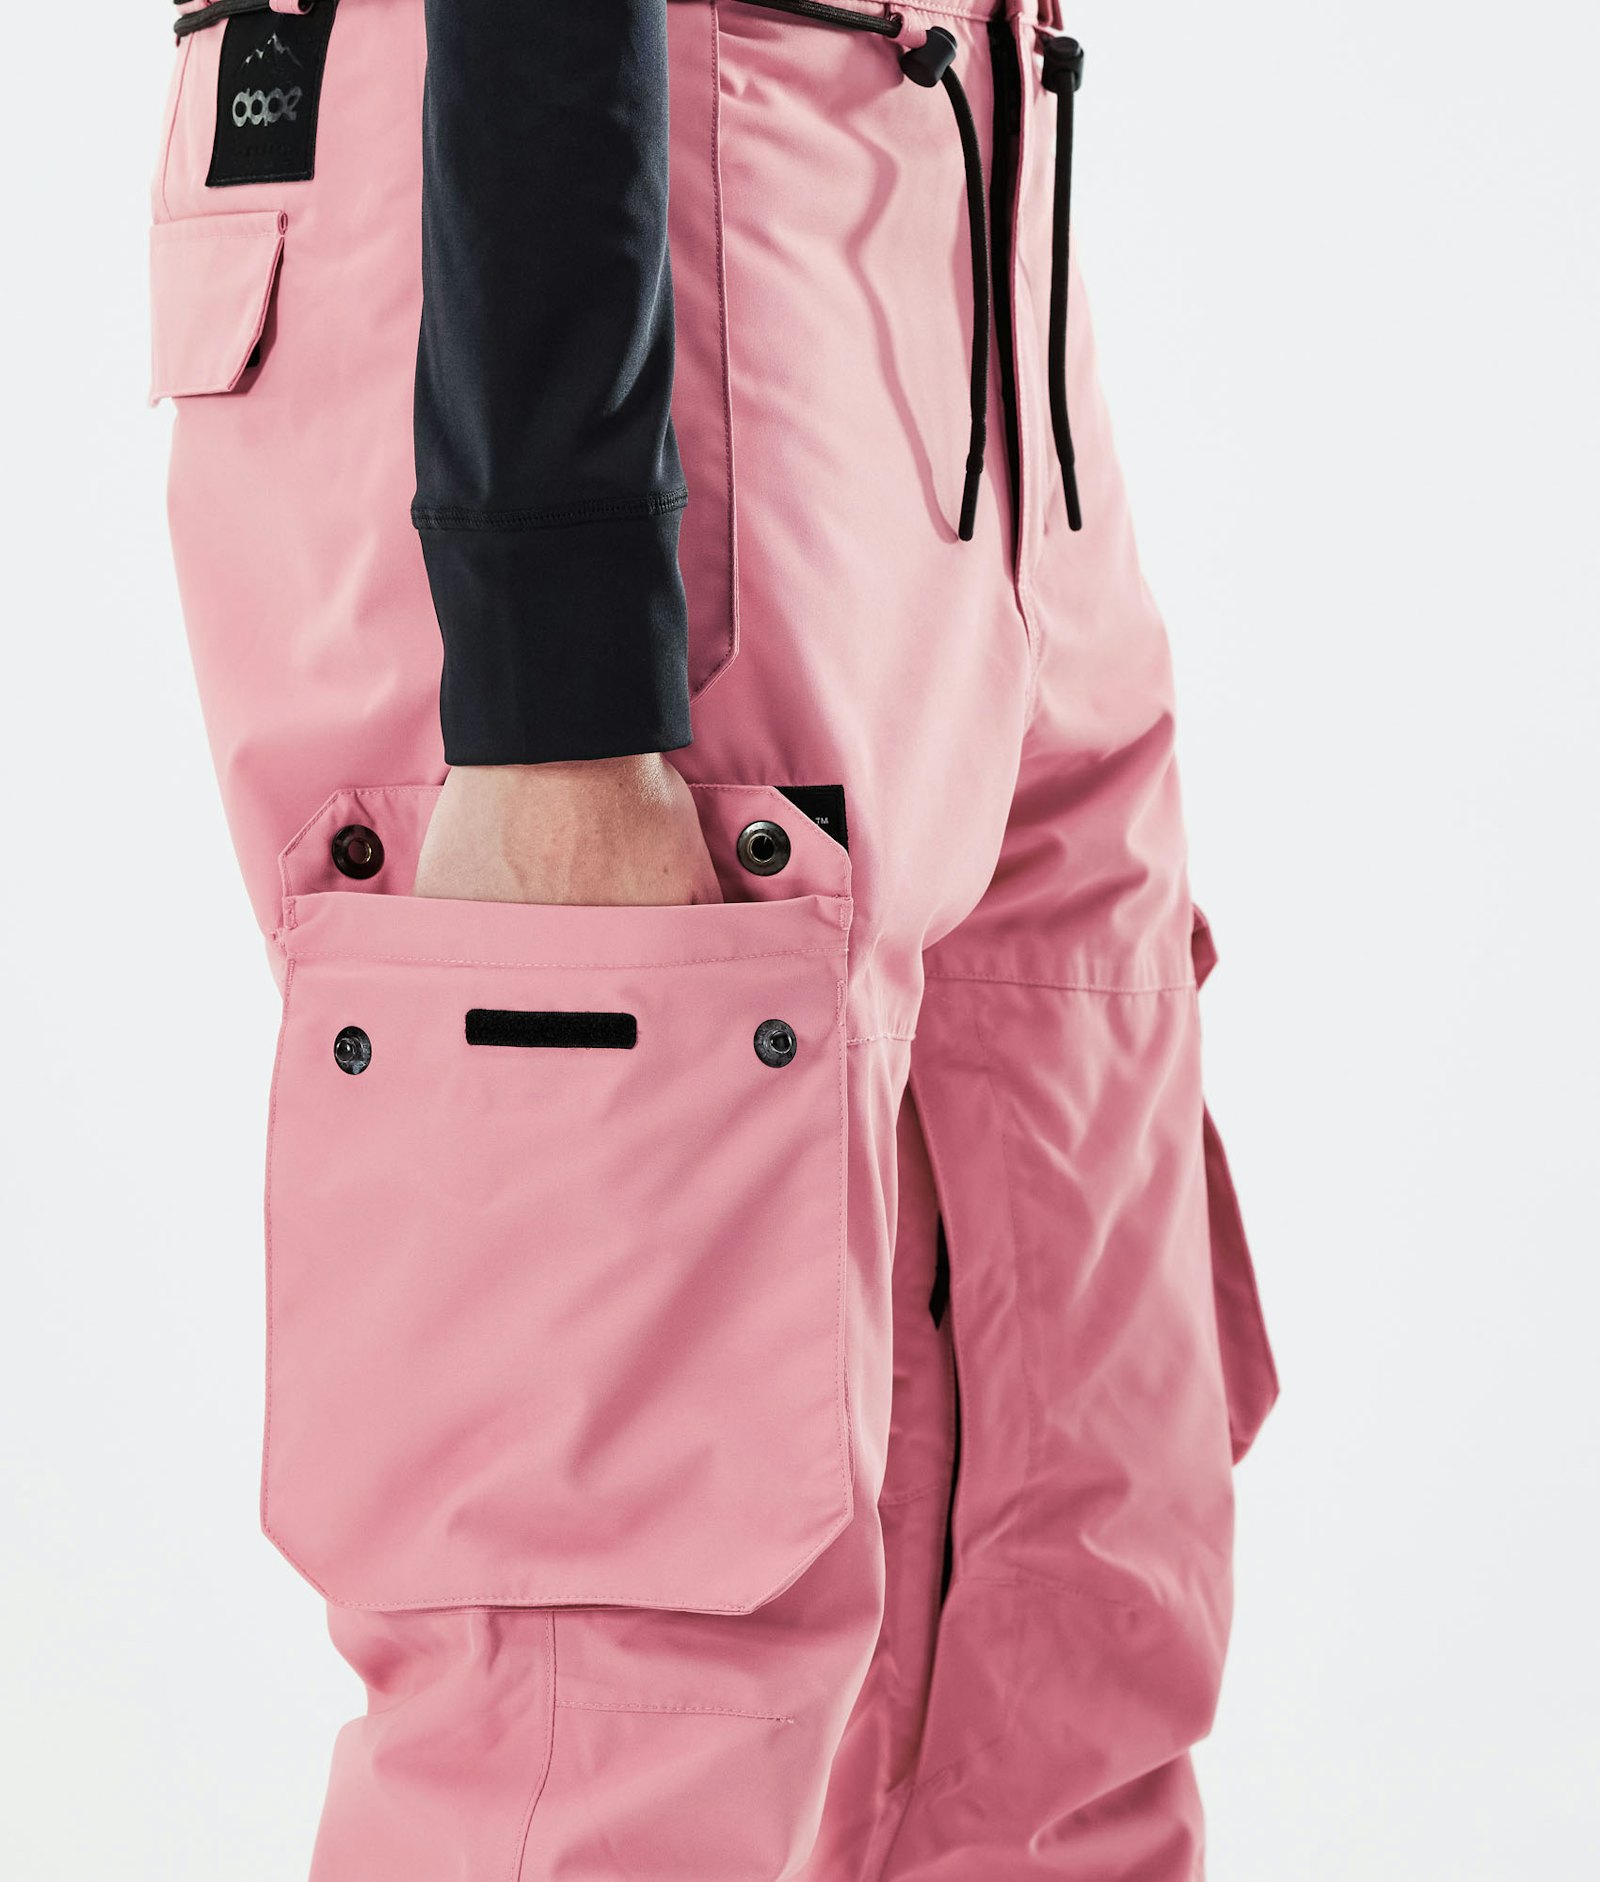 Iconic W 2021 Pantalon de Snowboard Femme Pink